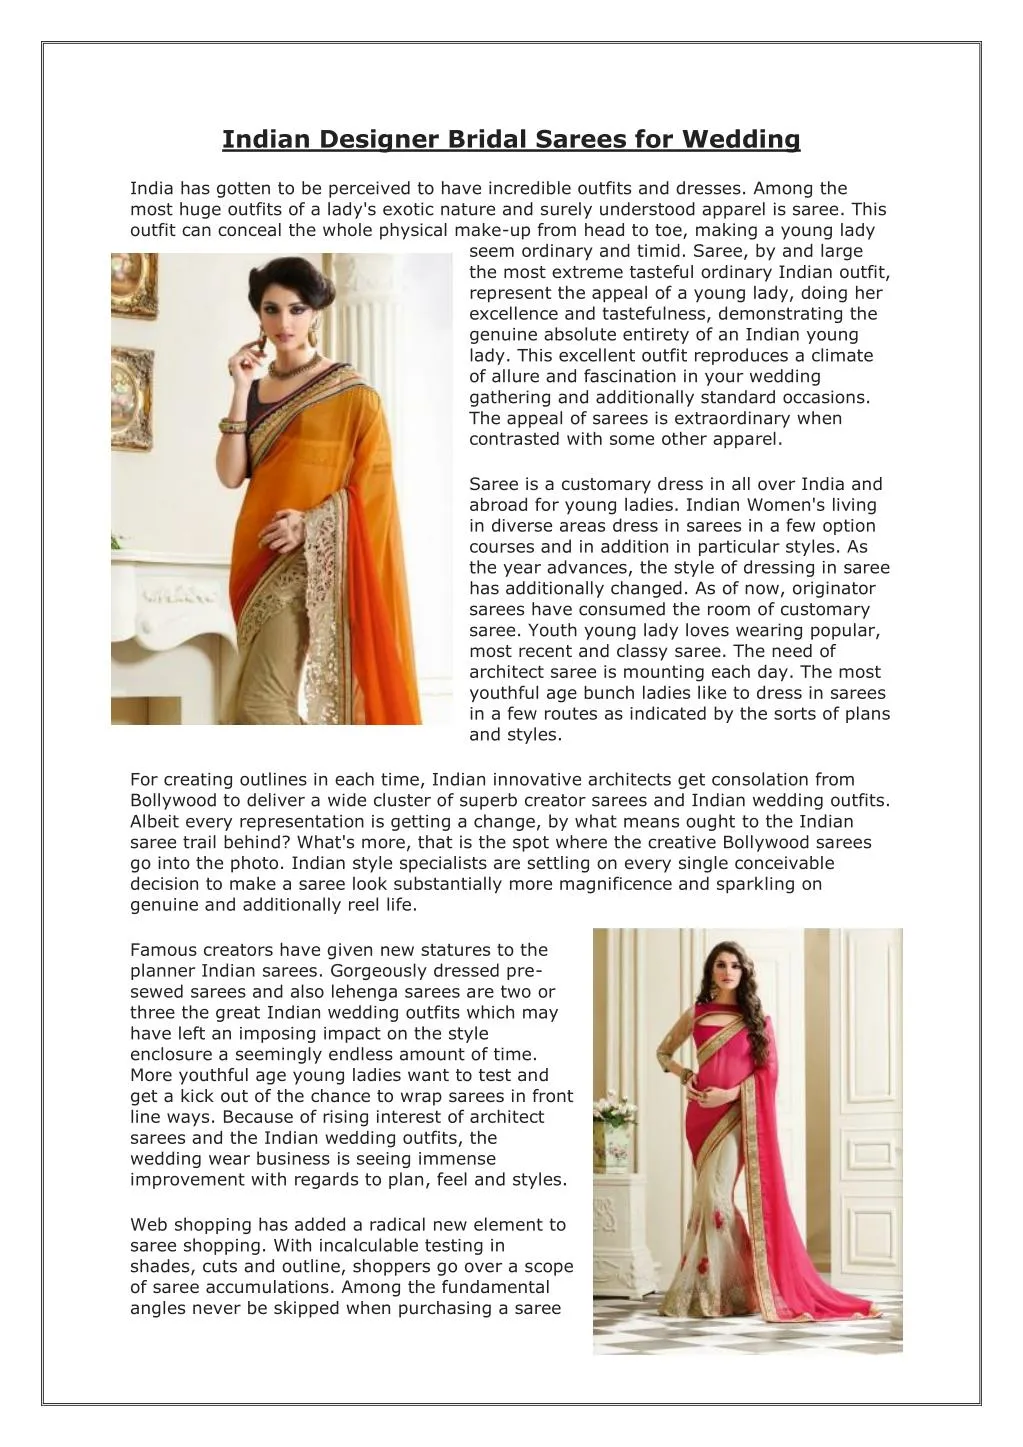 PPT - Indian Designer Bridal Sarees for Wedding PowerPoint Presentation ...